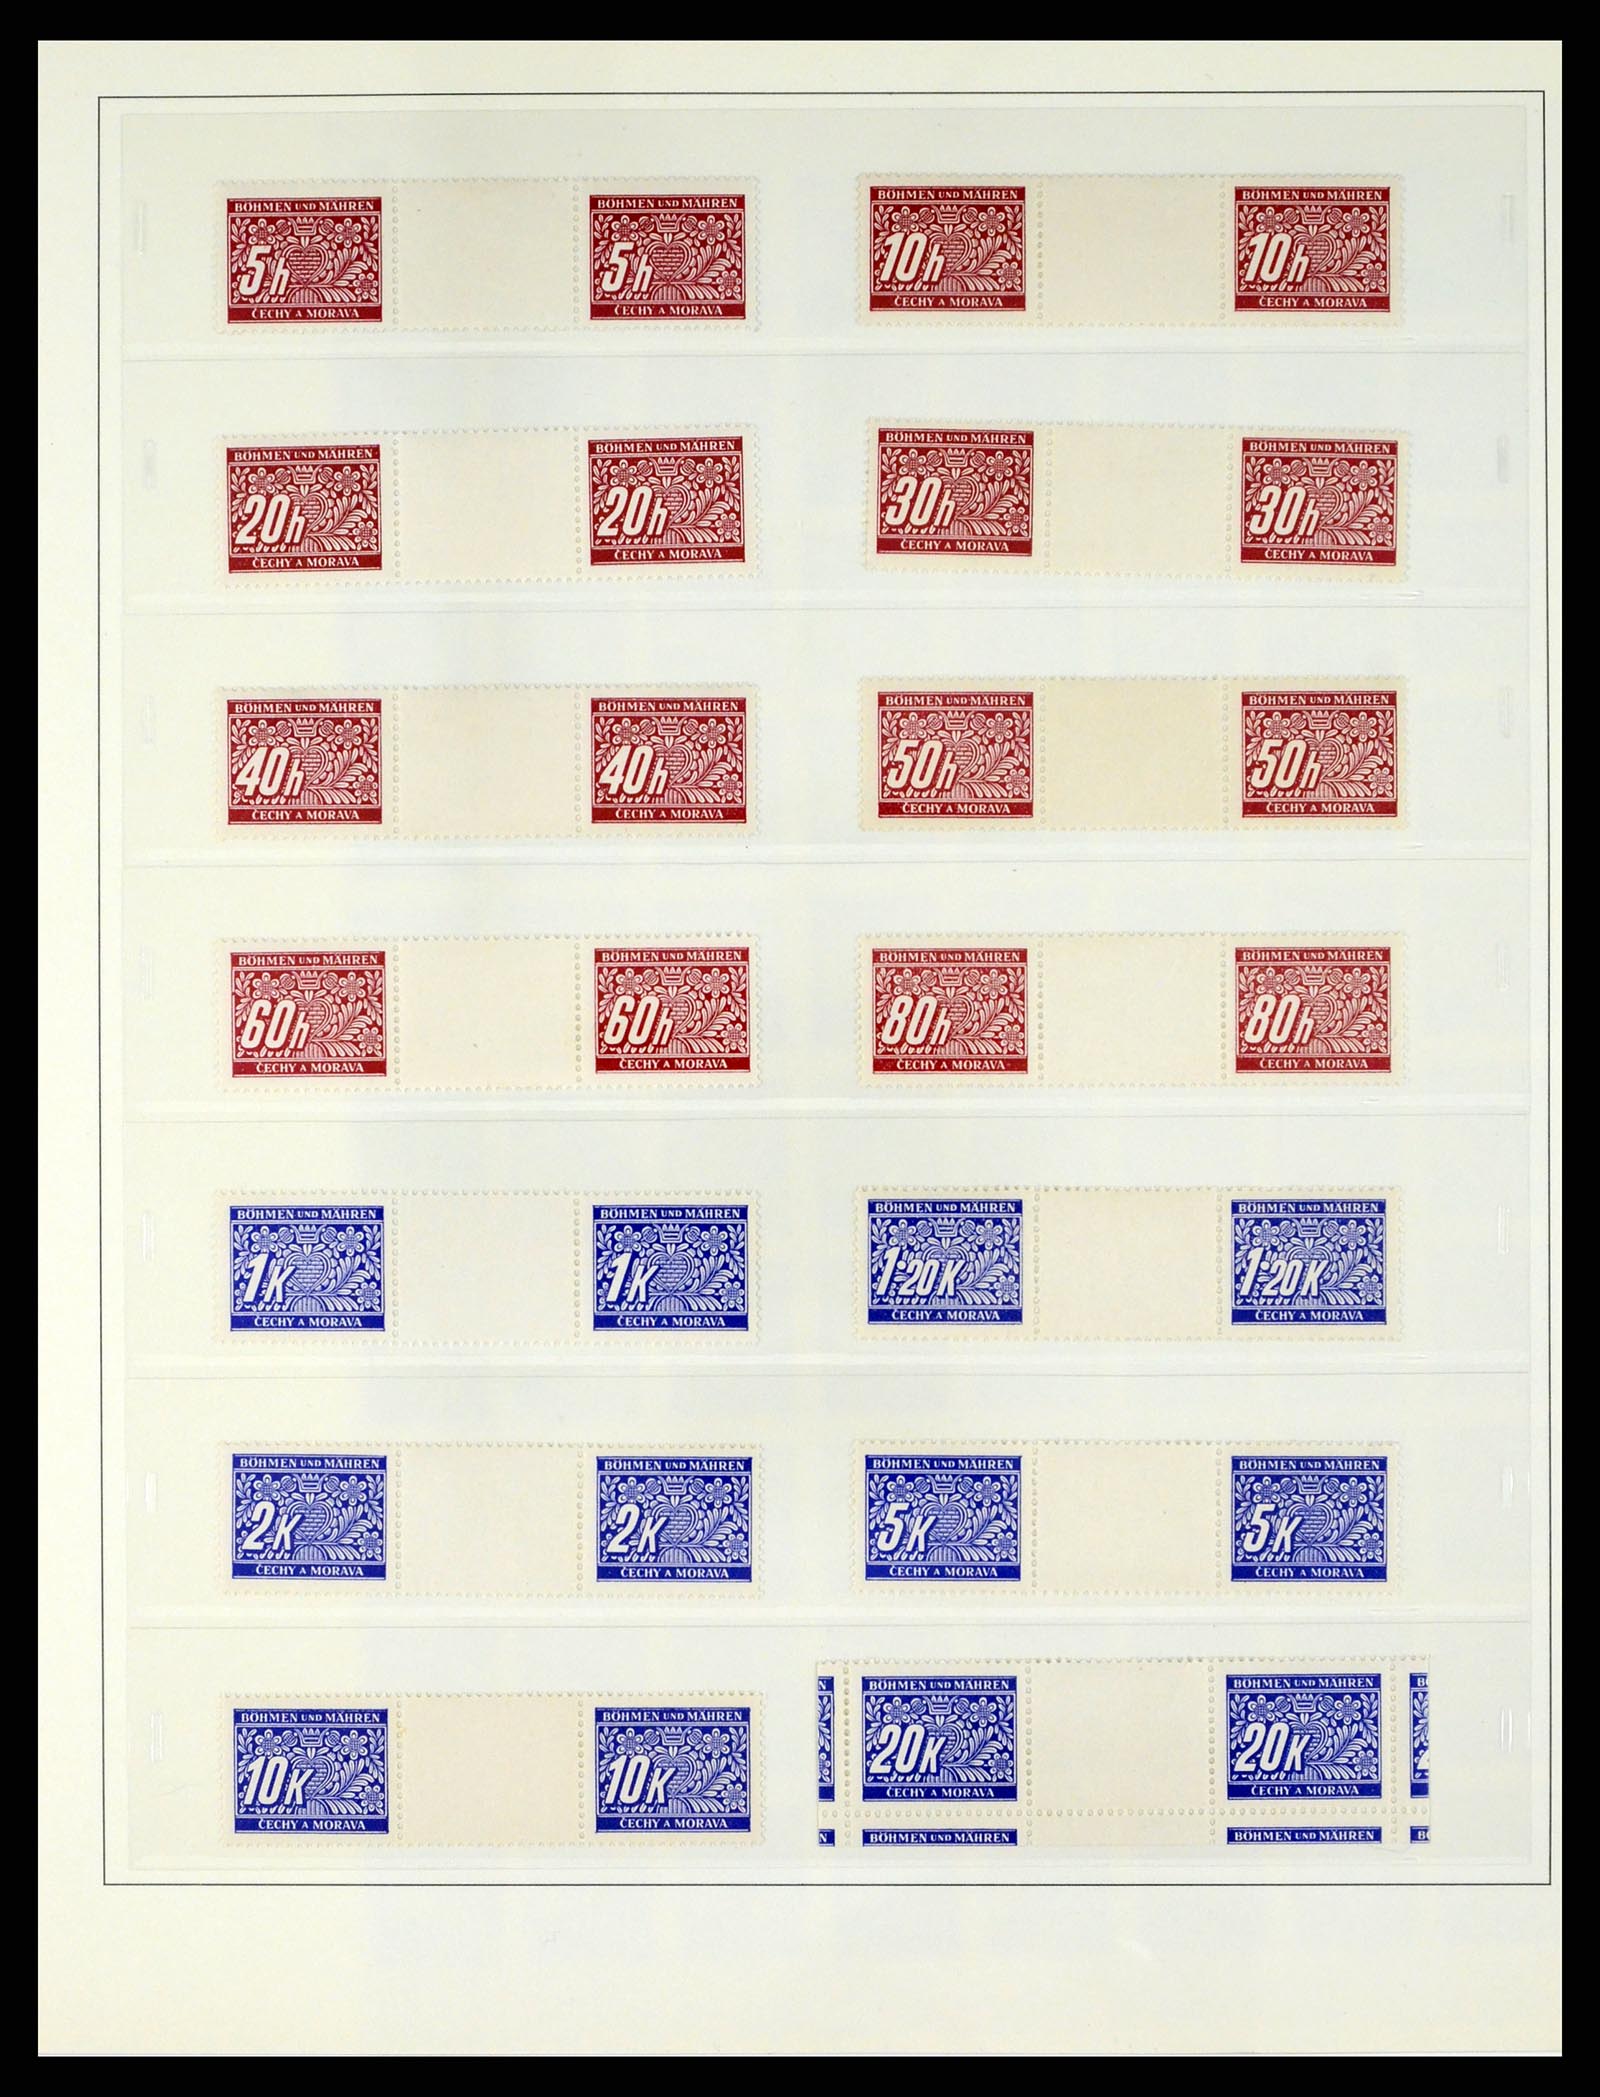 37535 038 - Stamp collection 37535 German occupation second worldwar 1939-1945.